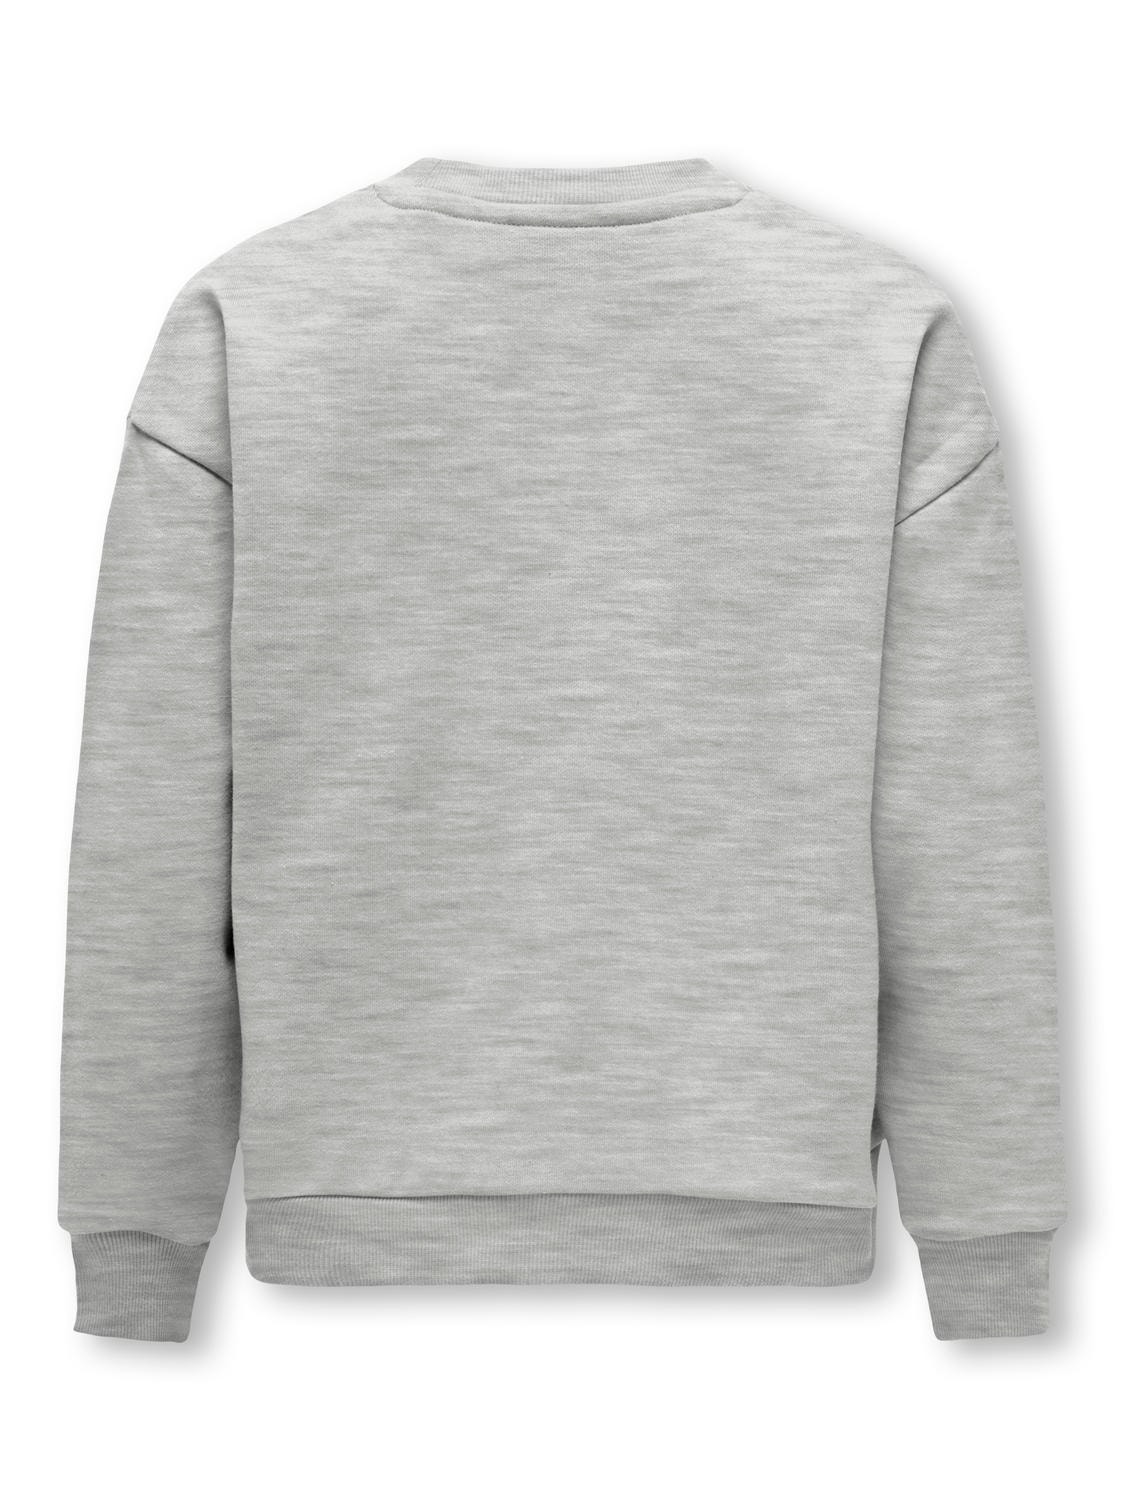 ONLY o-neck sweatshirt -Light Grey Melange - 15303247